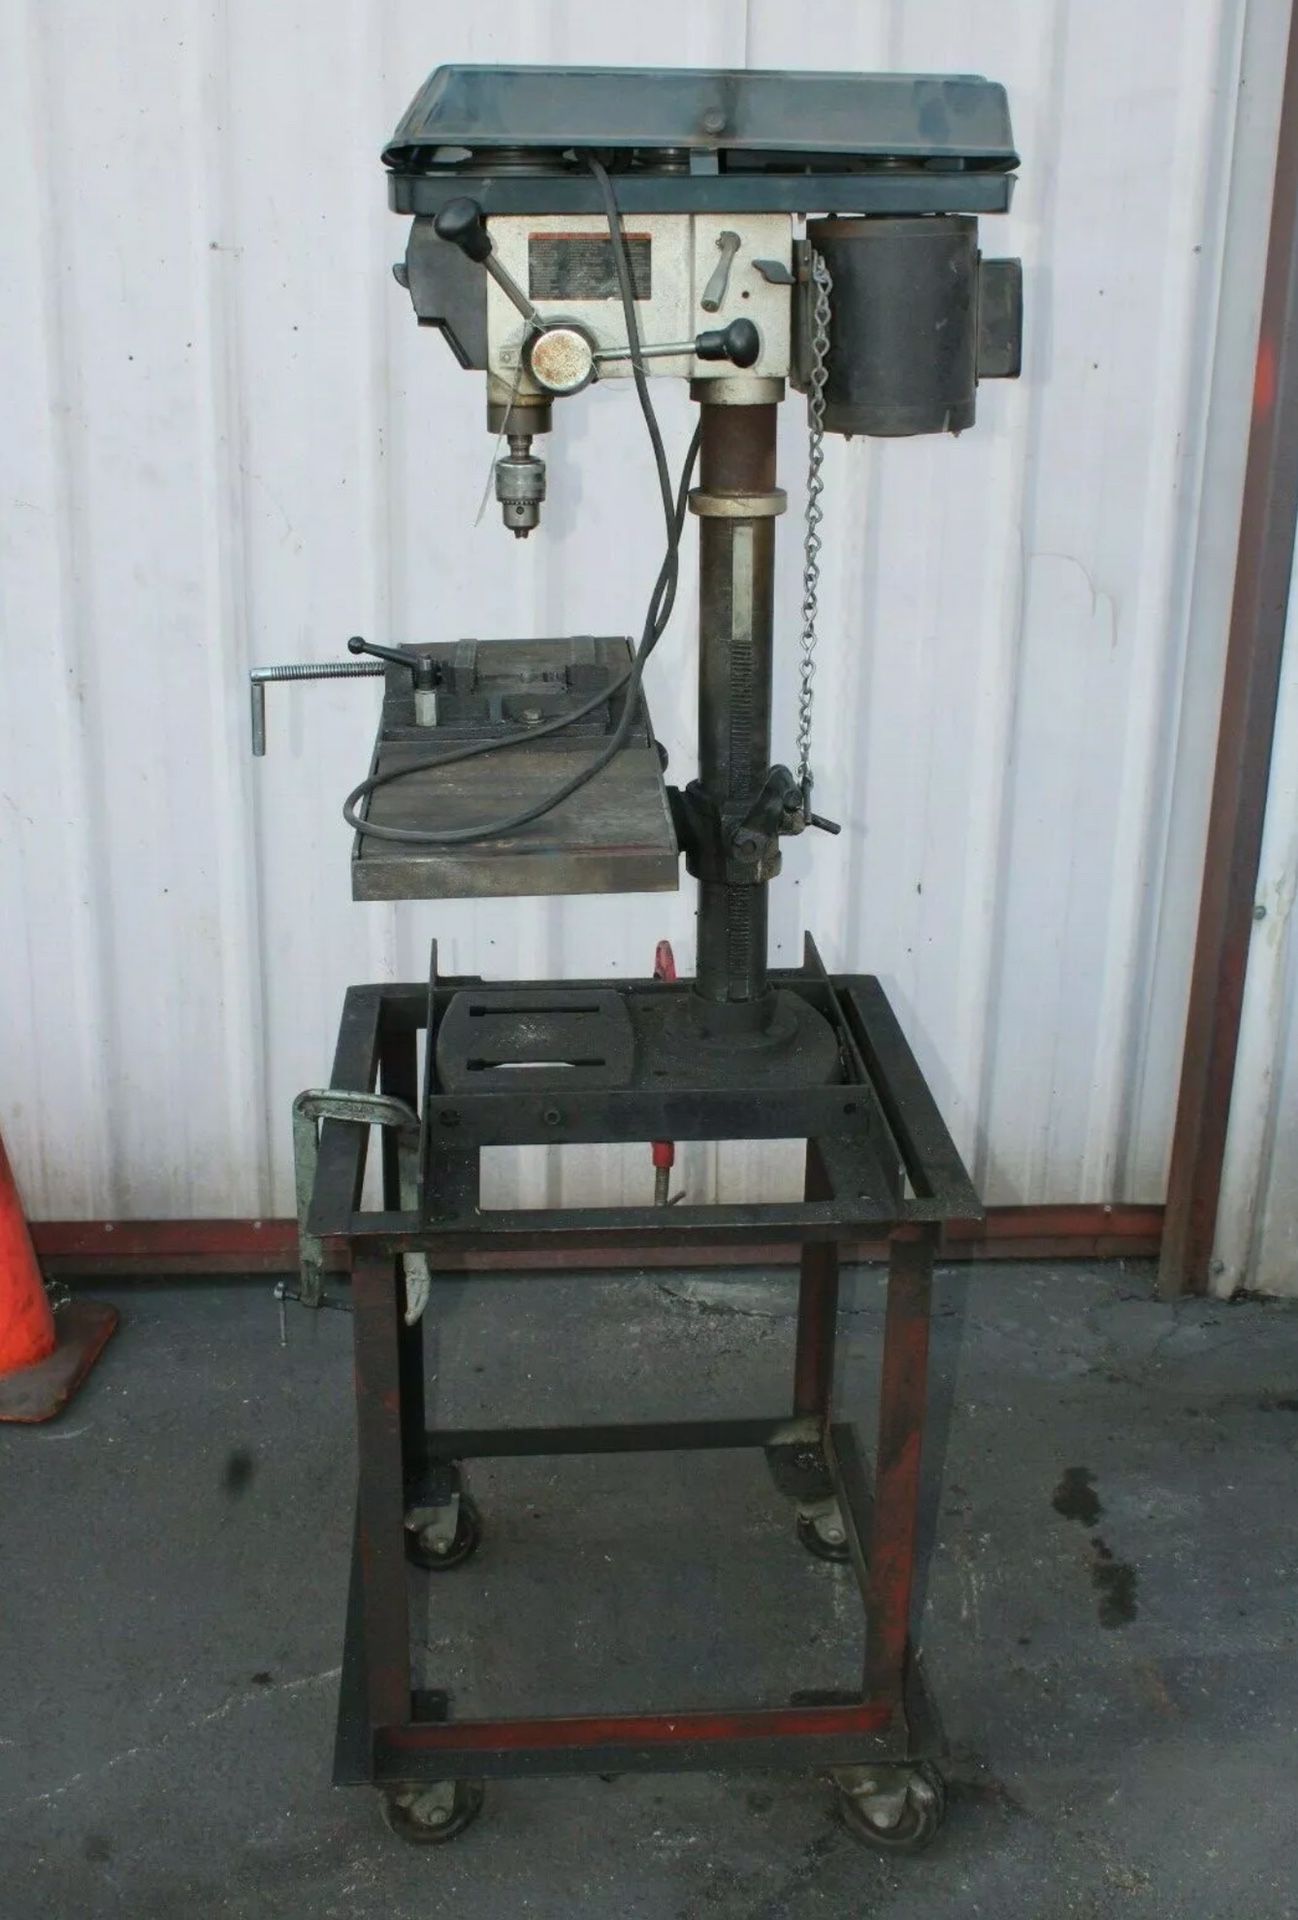 Ryobi DP120 12” Bench Drill Press W/ Stand